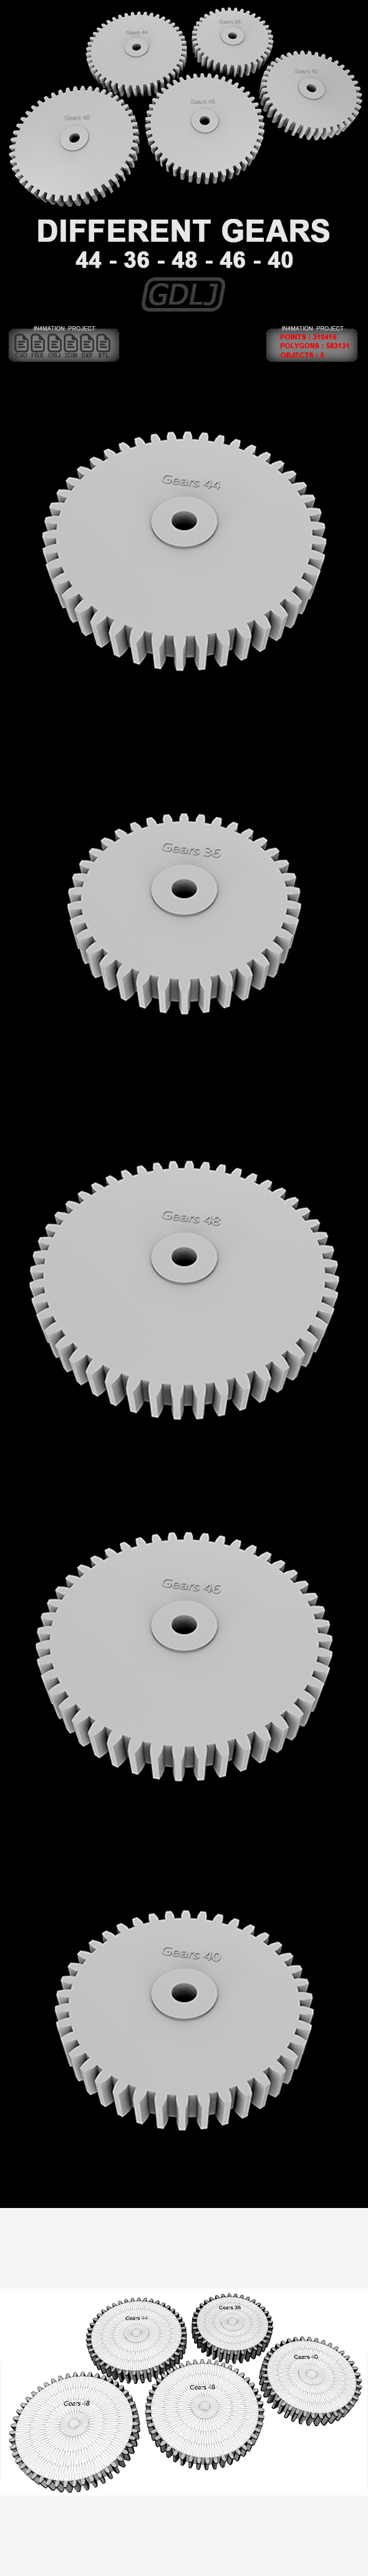 5 Different gears - 3Docean 21639337